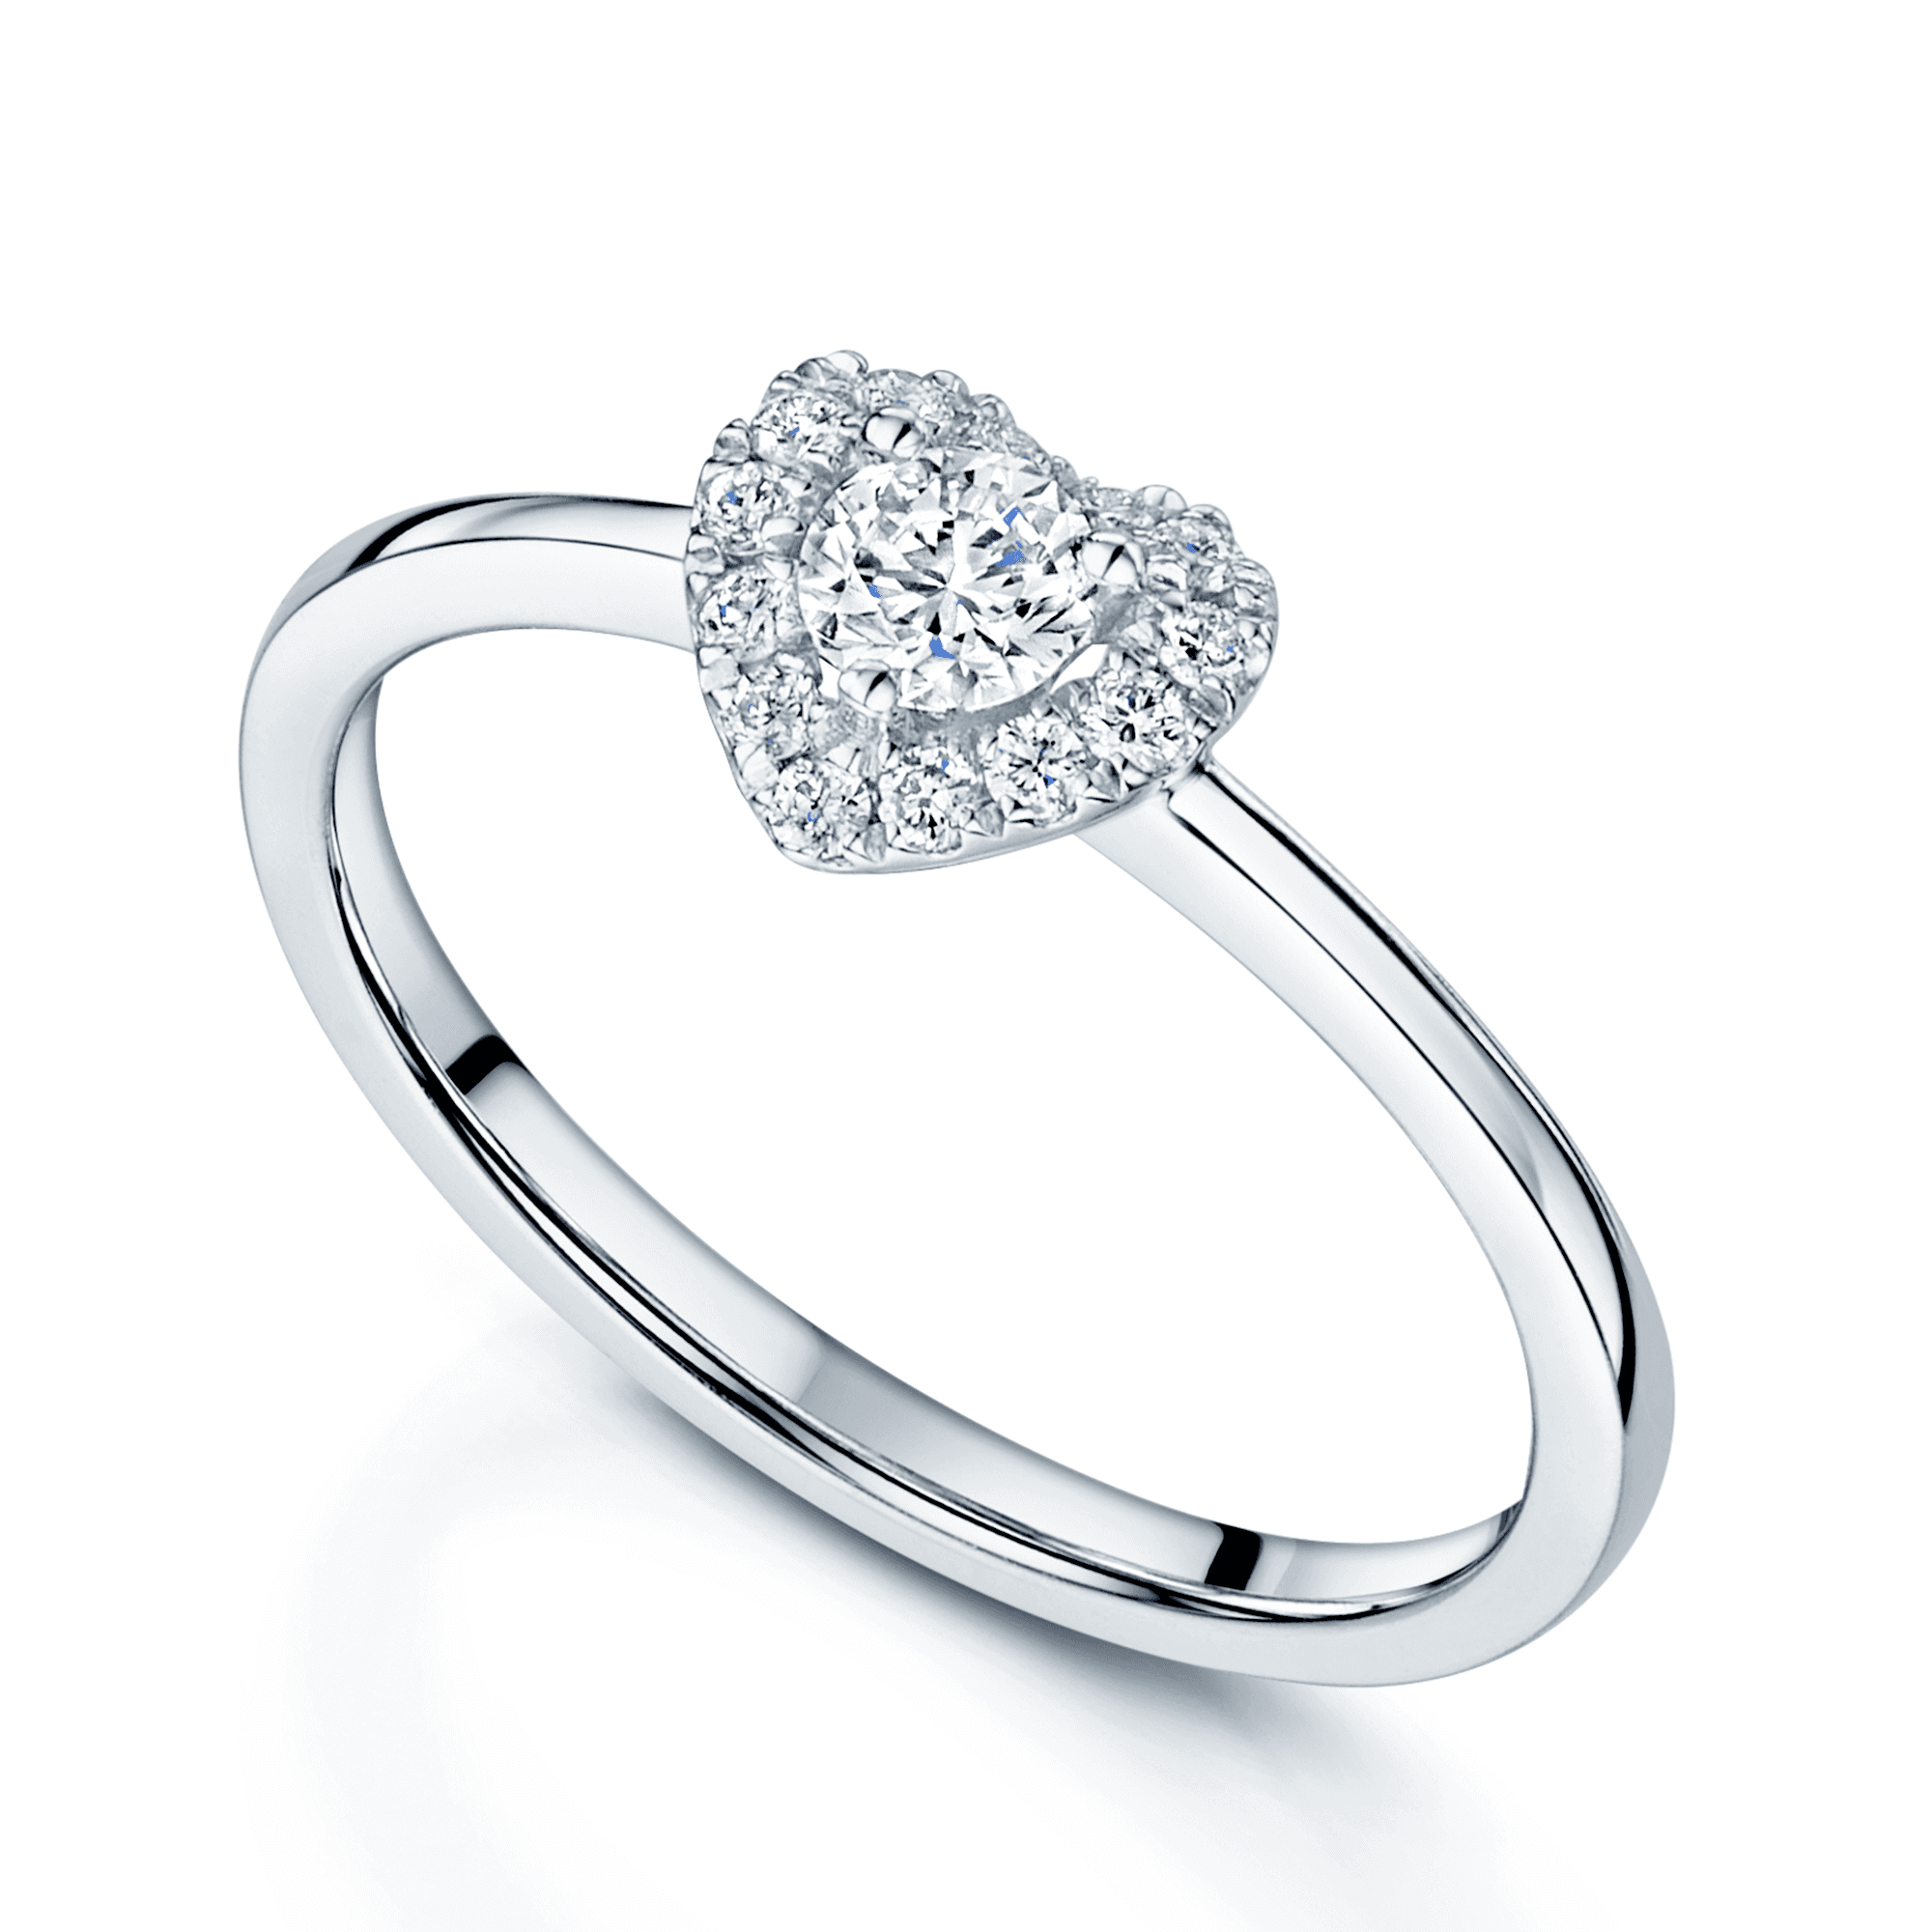 Platinum Heart Shaped Diamond Ring With Halo Surround